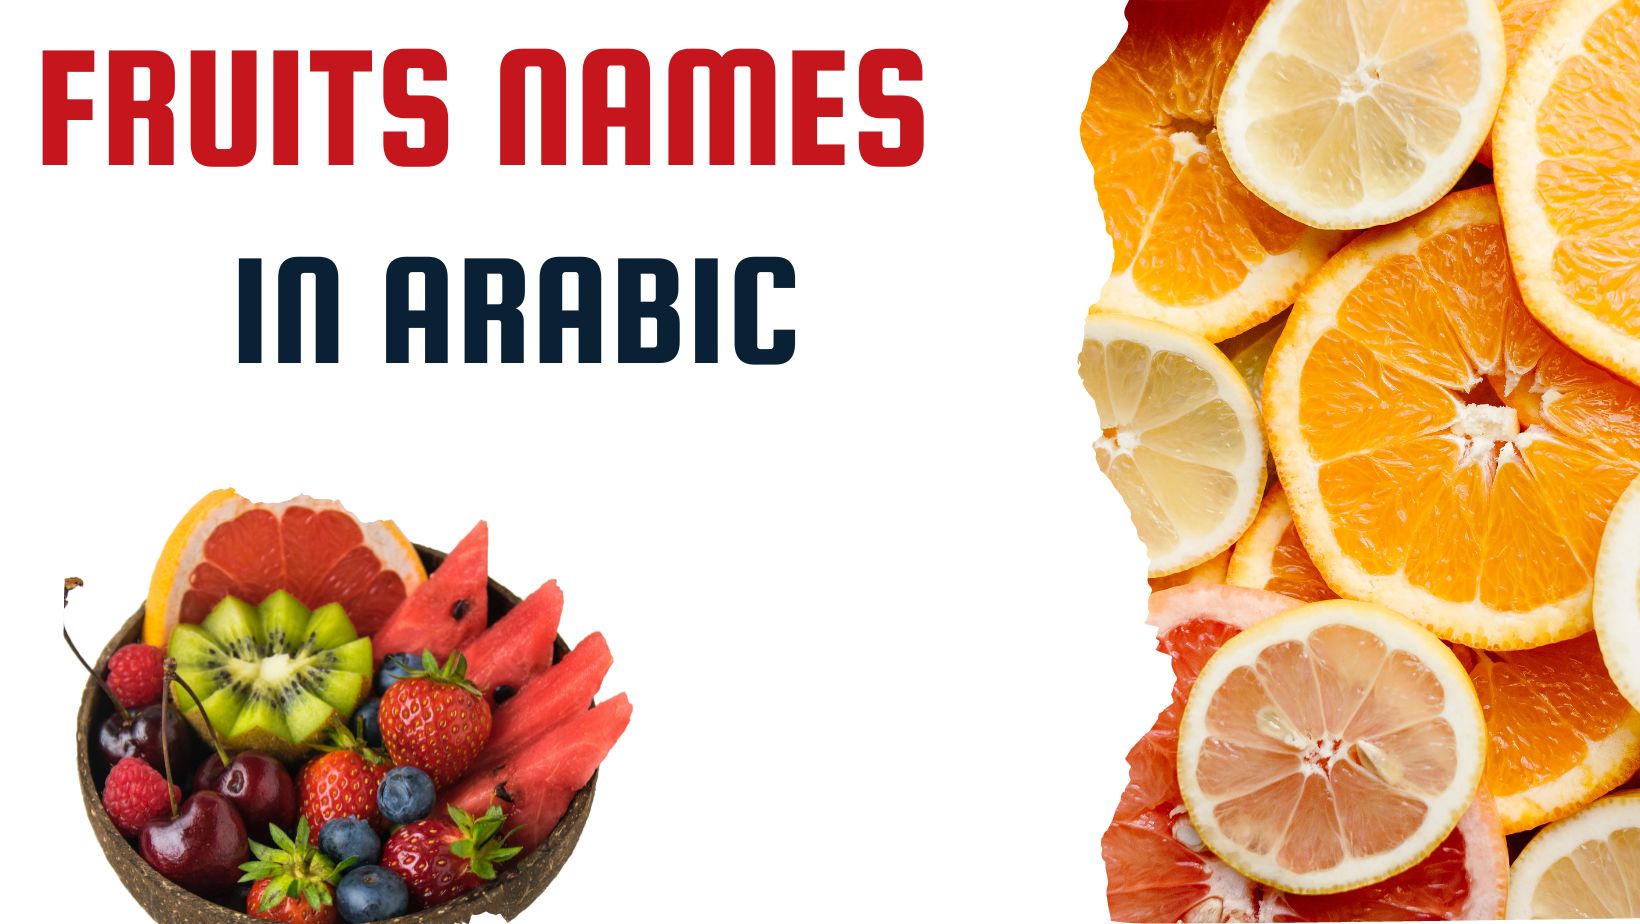 Fruits names in Arabic